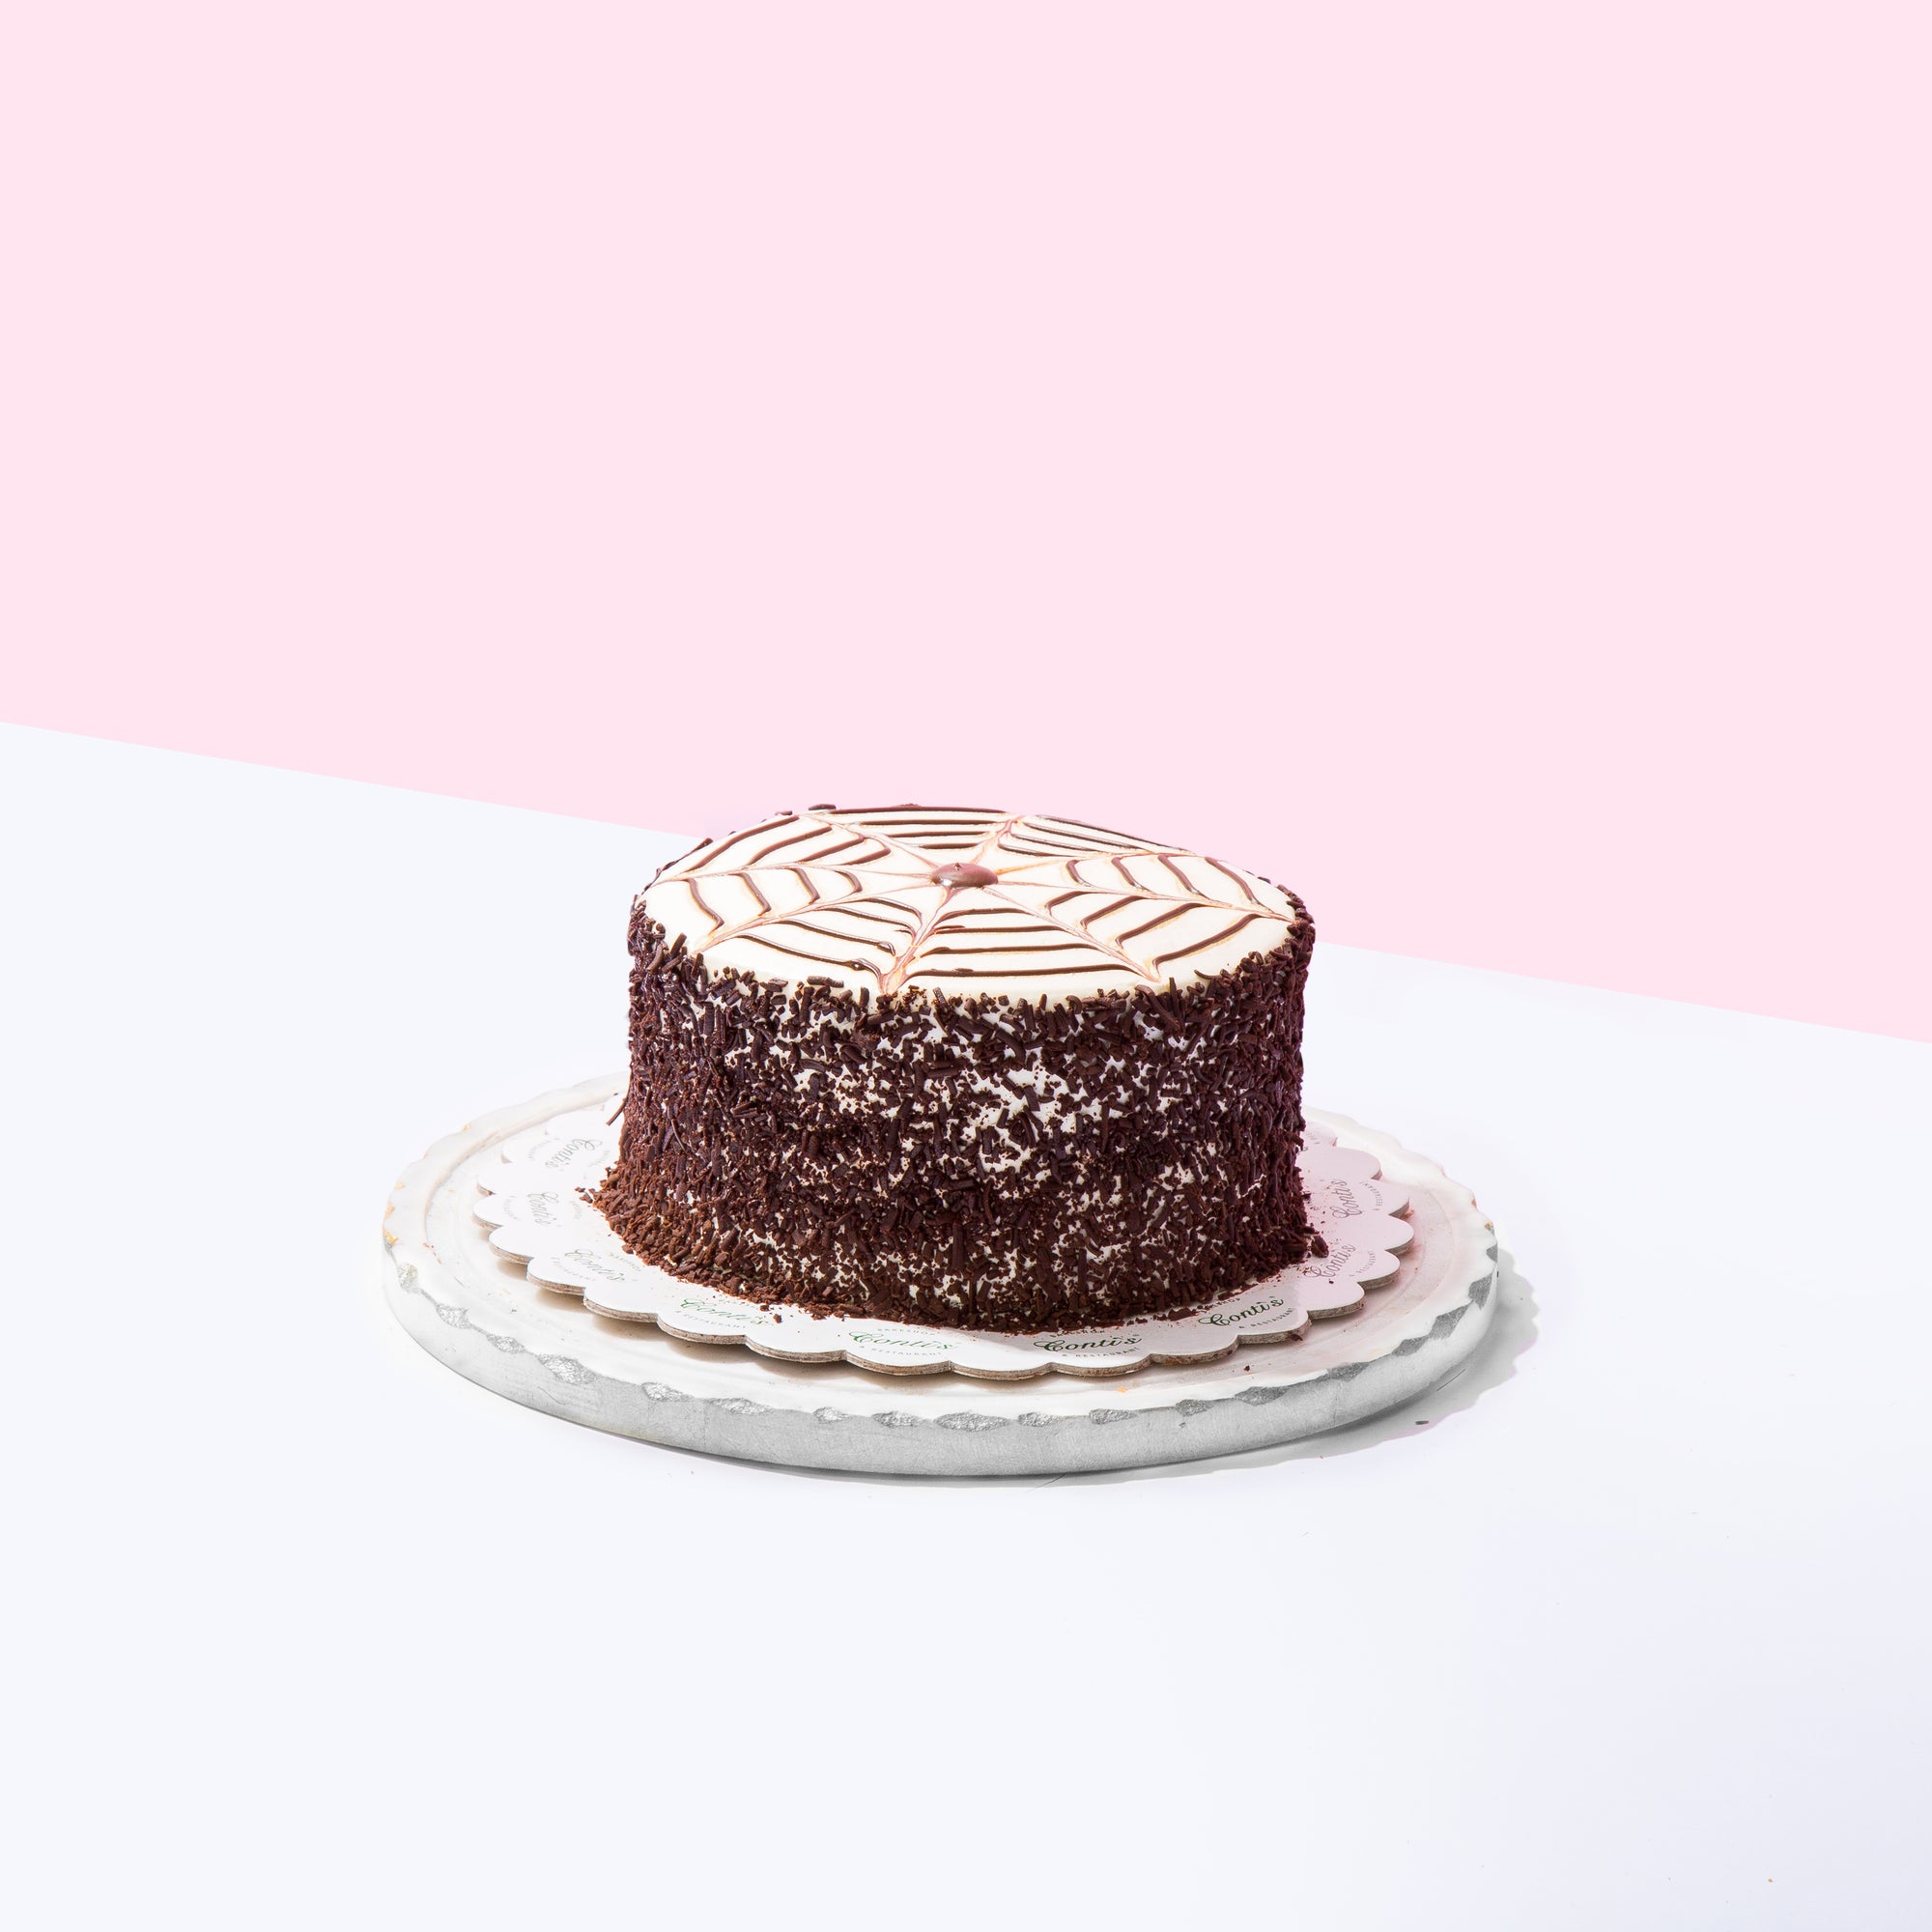 Black Velvet Cake by Conti's Cake Review - YouTube